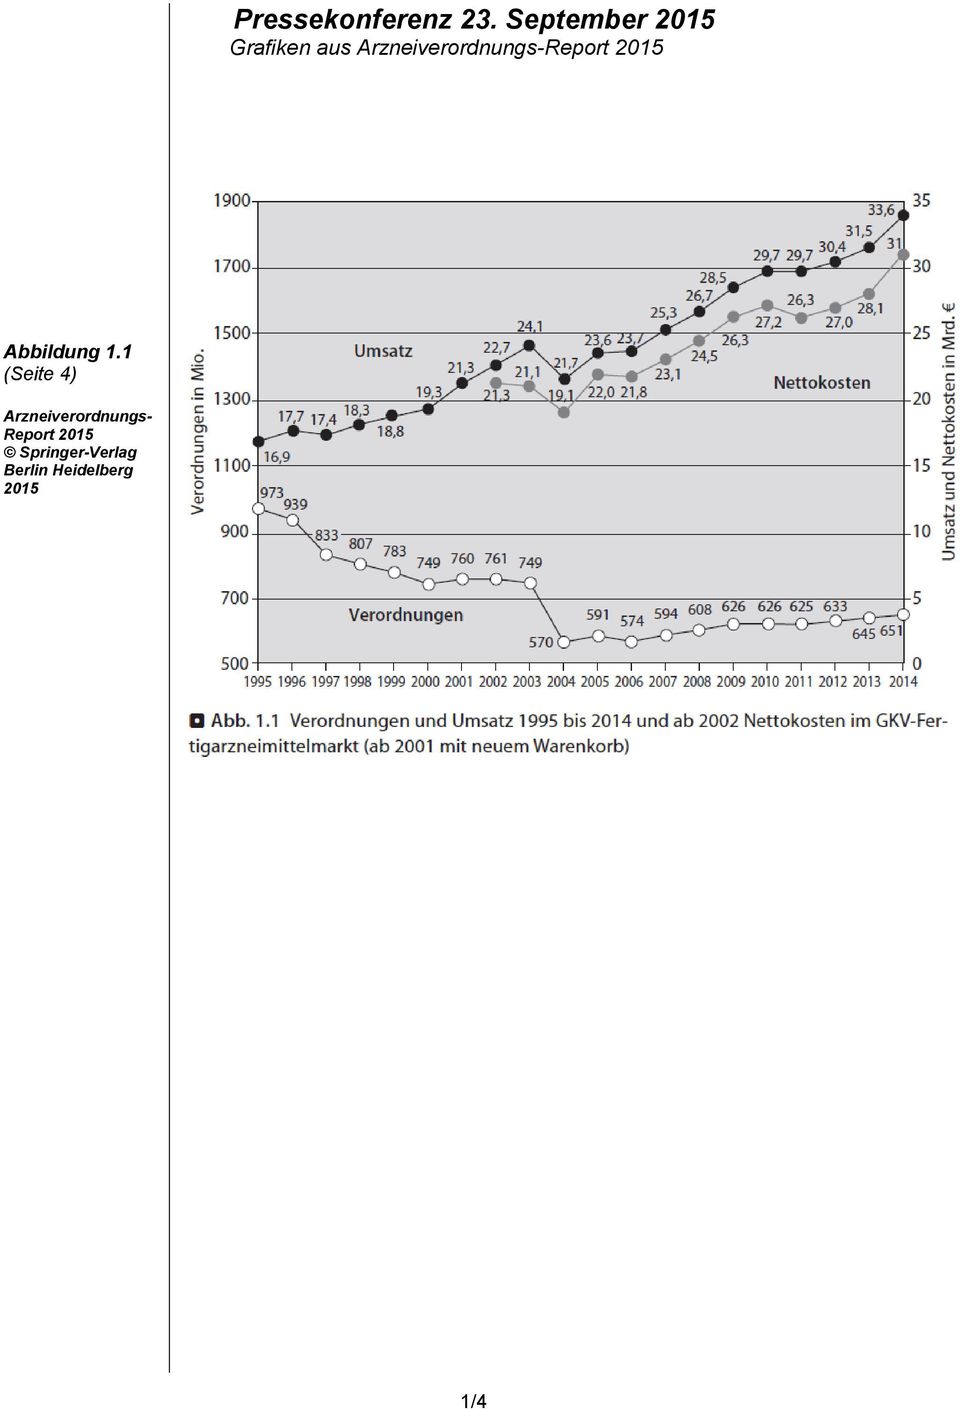 Arzneiverordnungs-Report 2015 Abbildung 1.